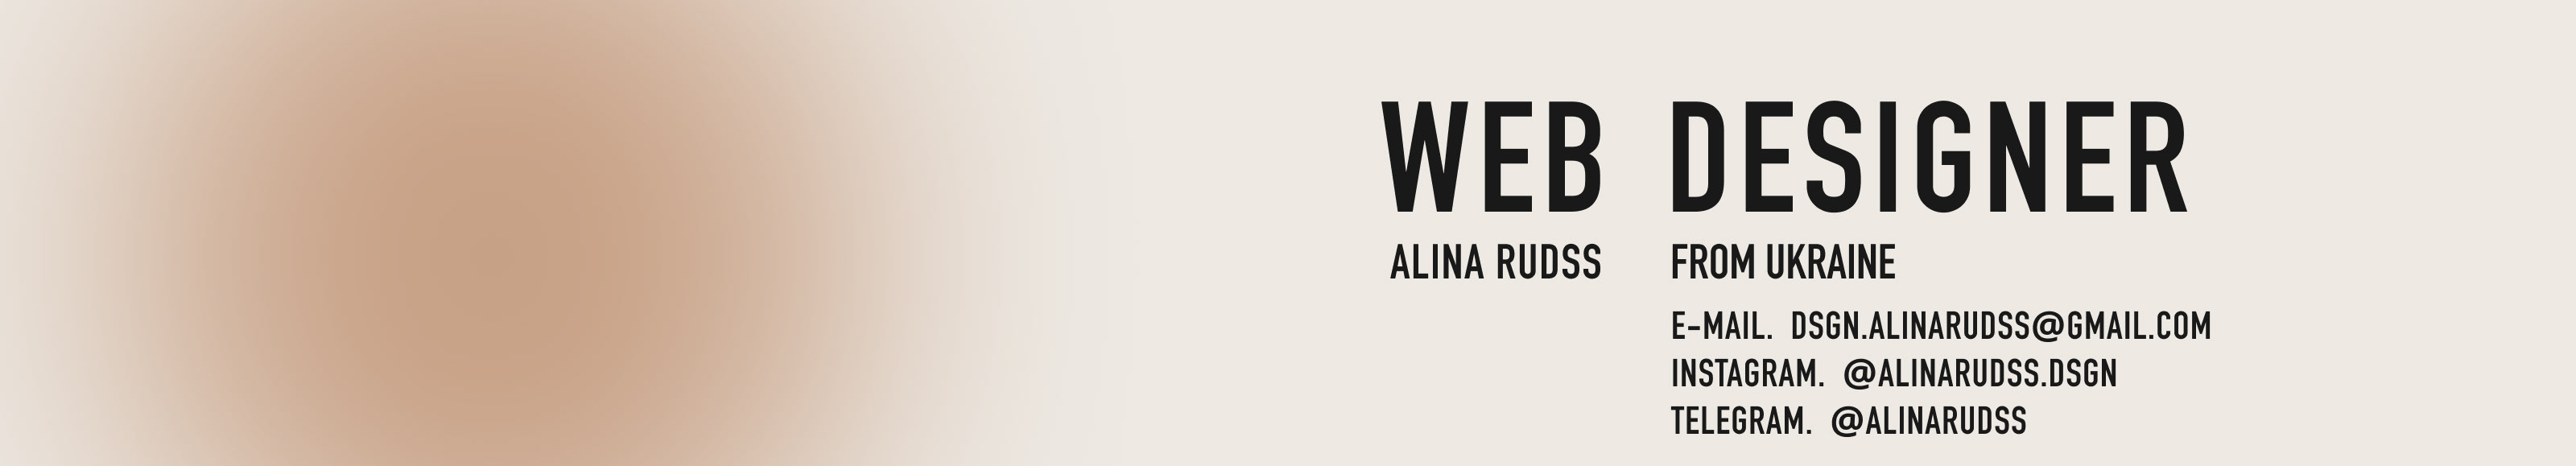 ALINA RUDSS's profile banner